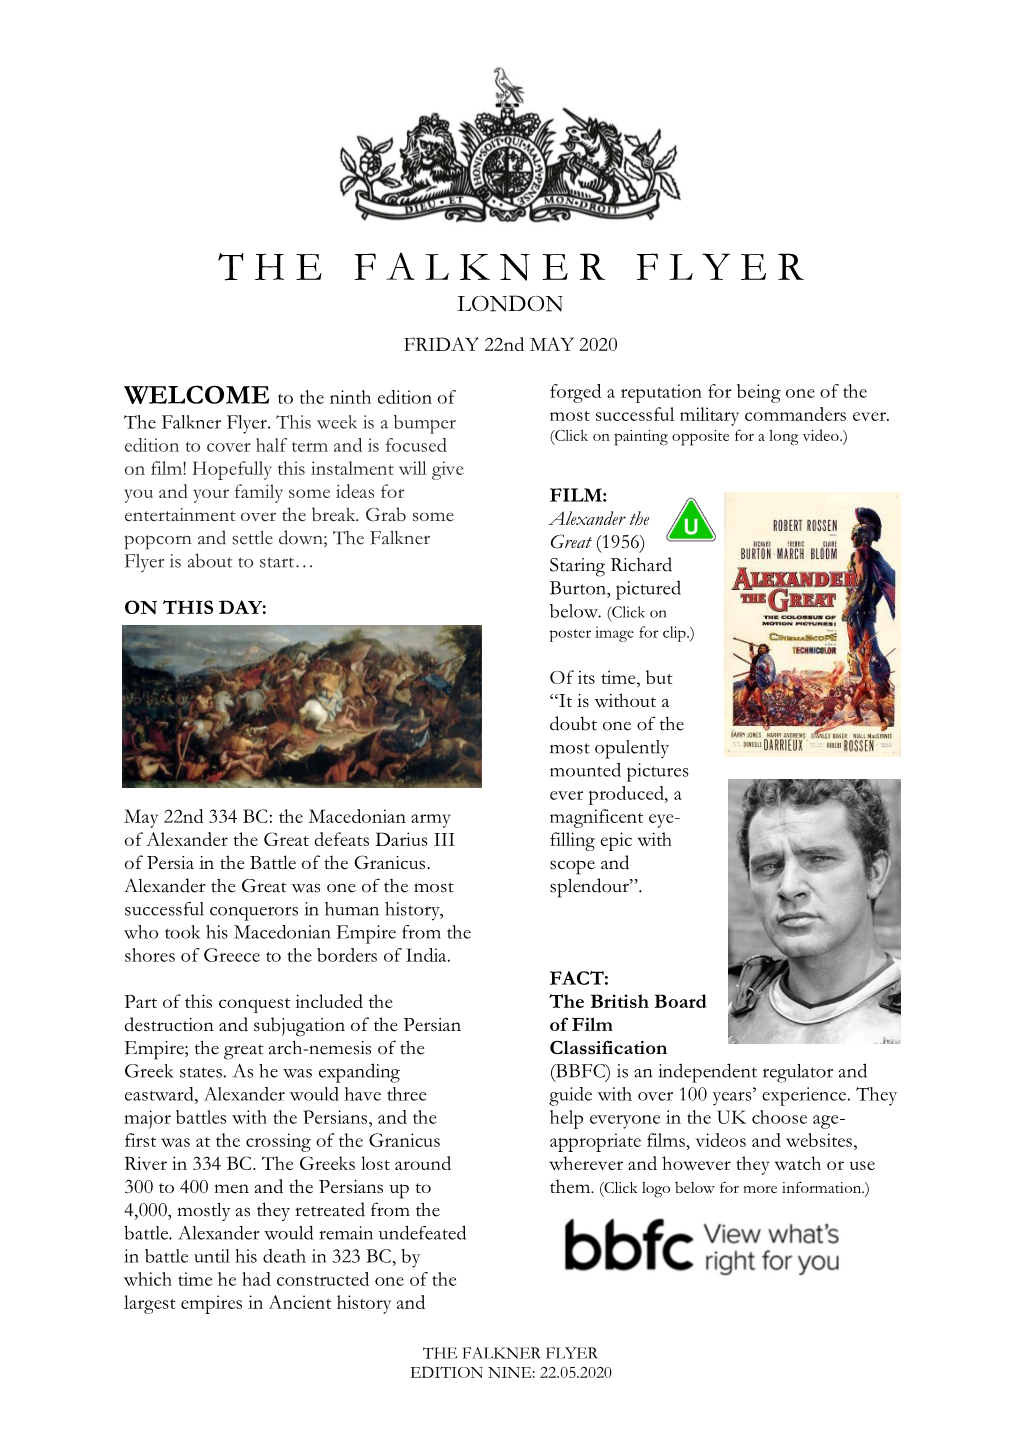 The Falkner Flyer Edition Nine: 22.05.2020